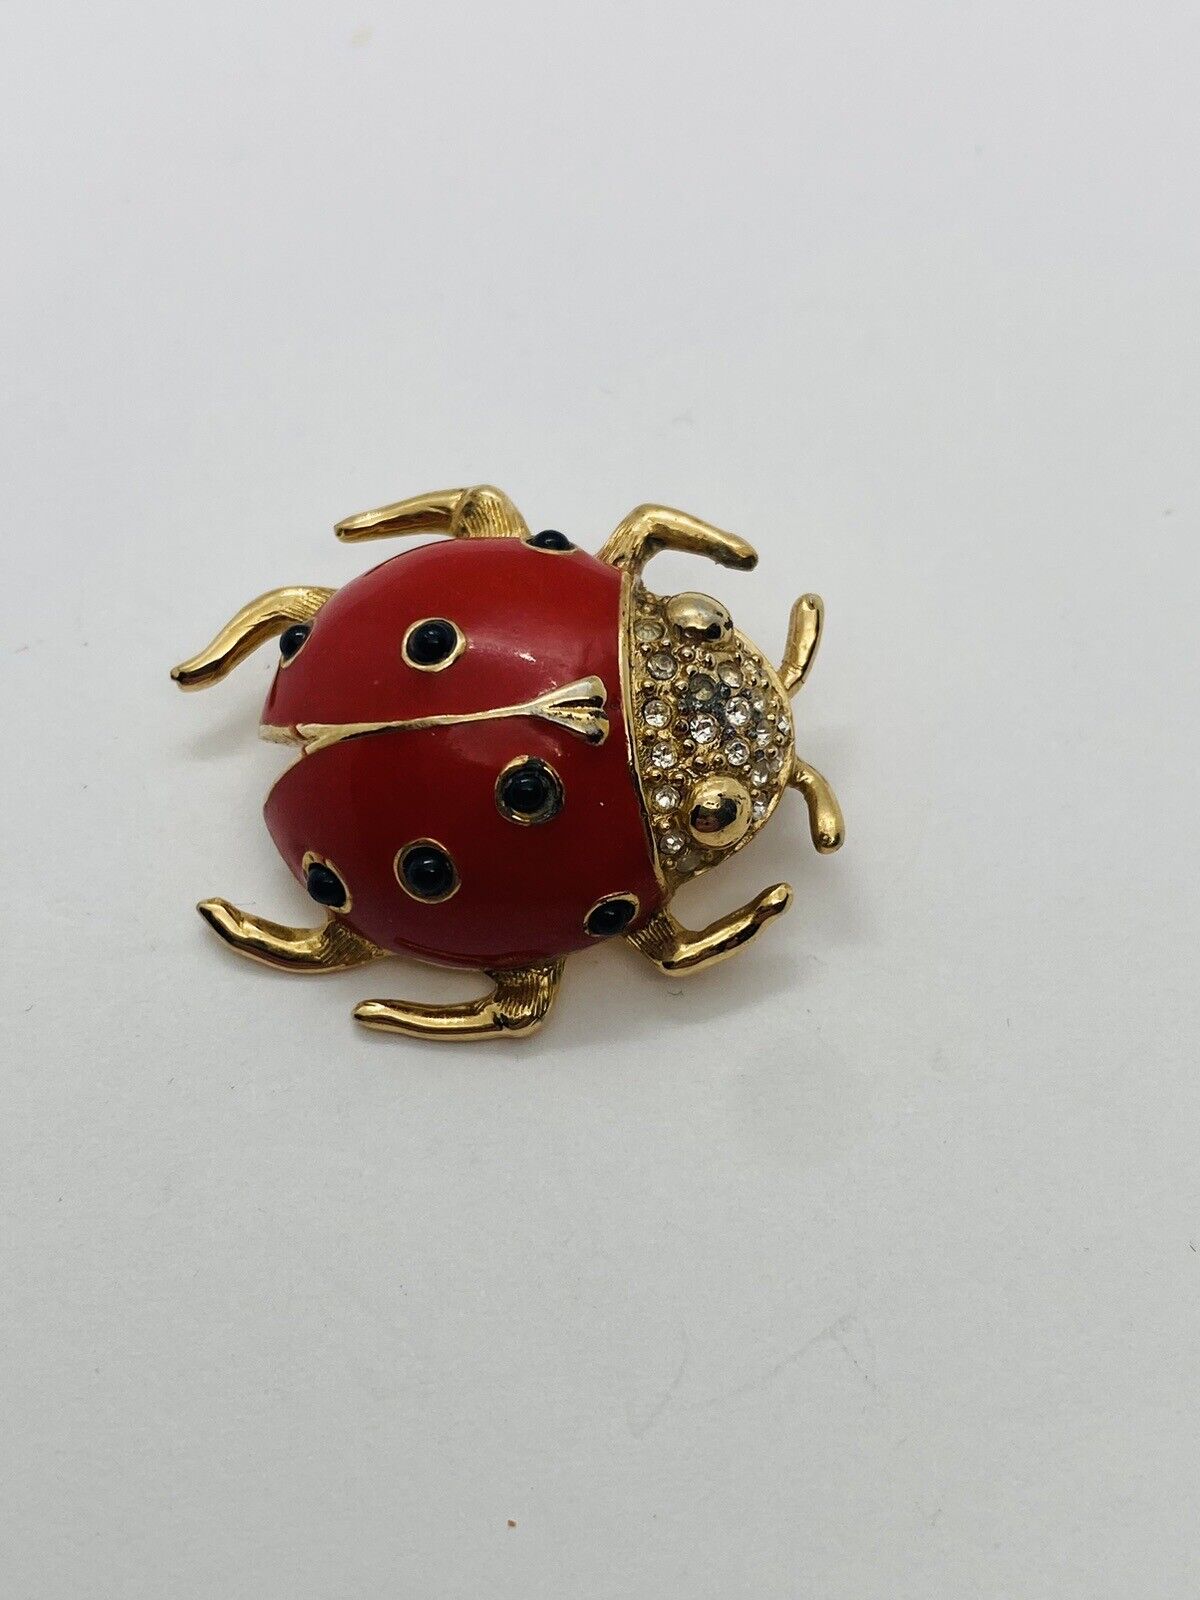 Vintage Rare Signed Guy Laroche Ladybug Enamel Crystal Brooch Pin Designer